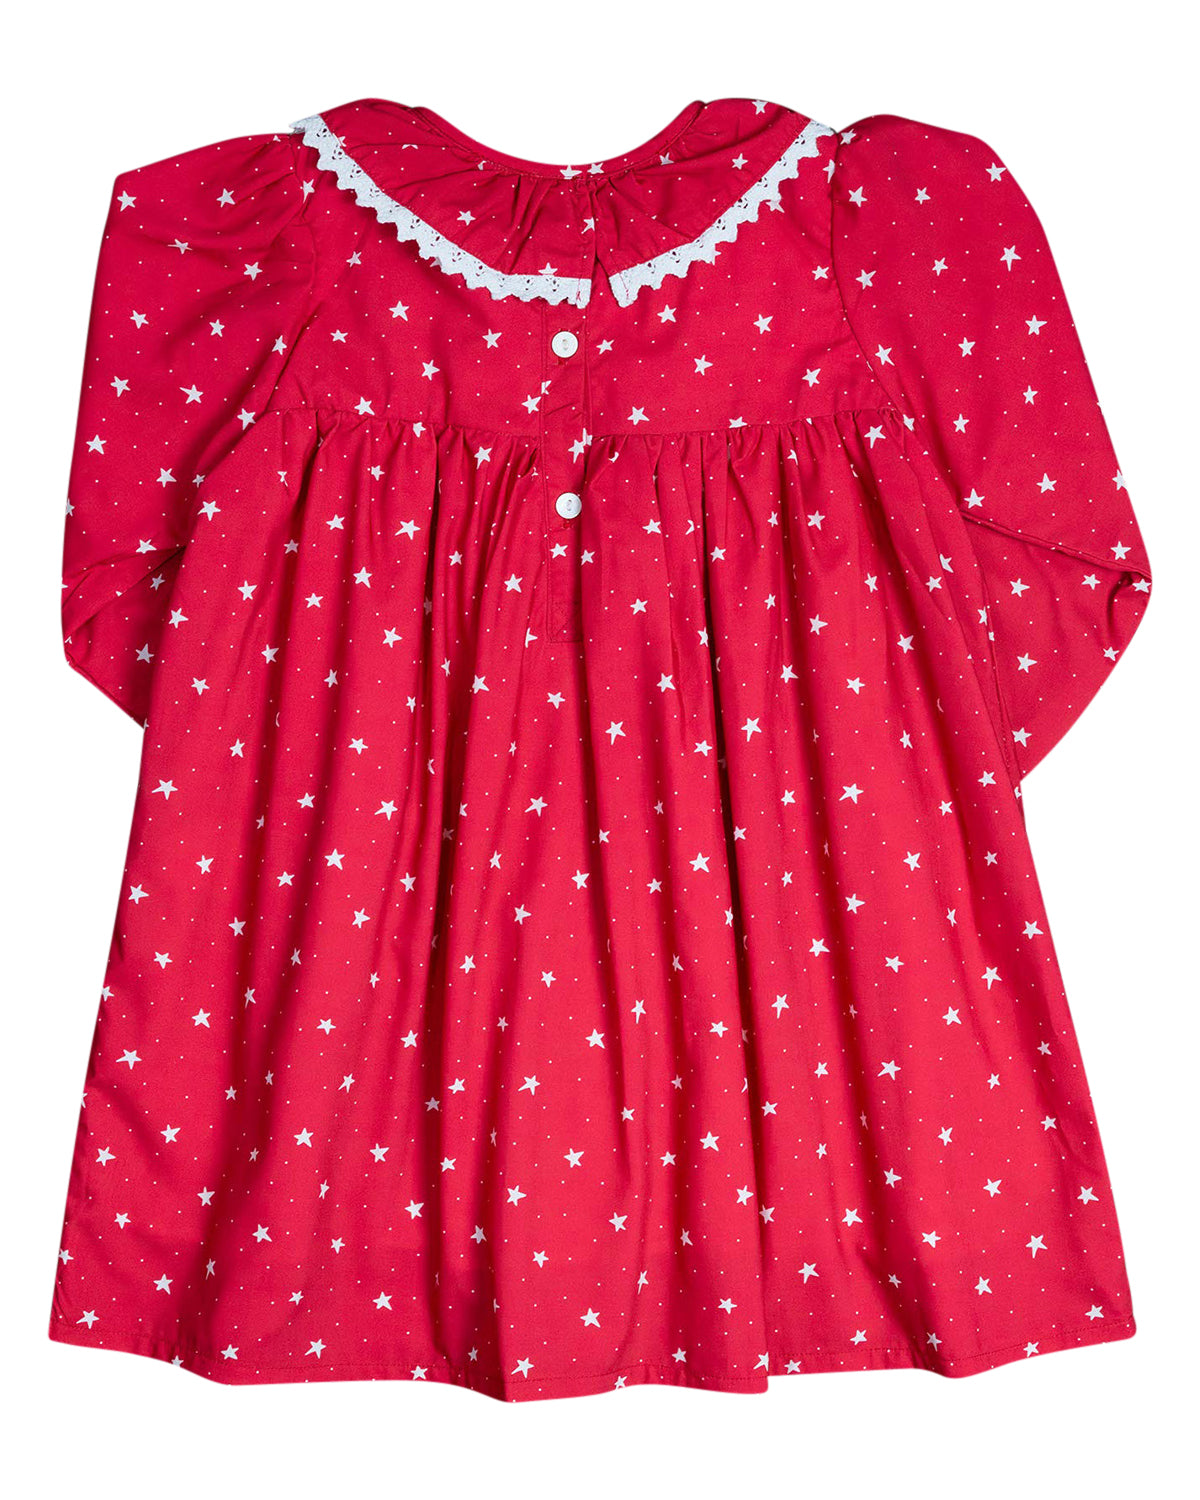 Red Star Print Smocked Dress- FINAL SALE